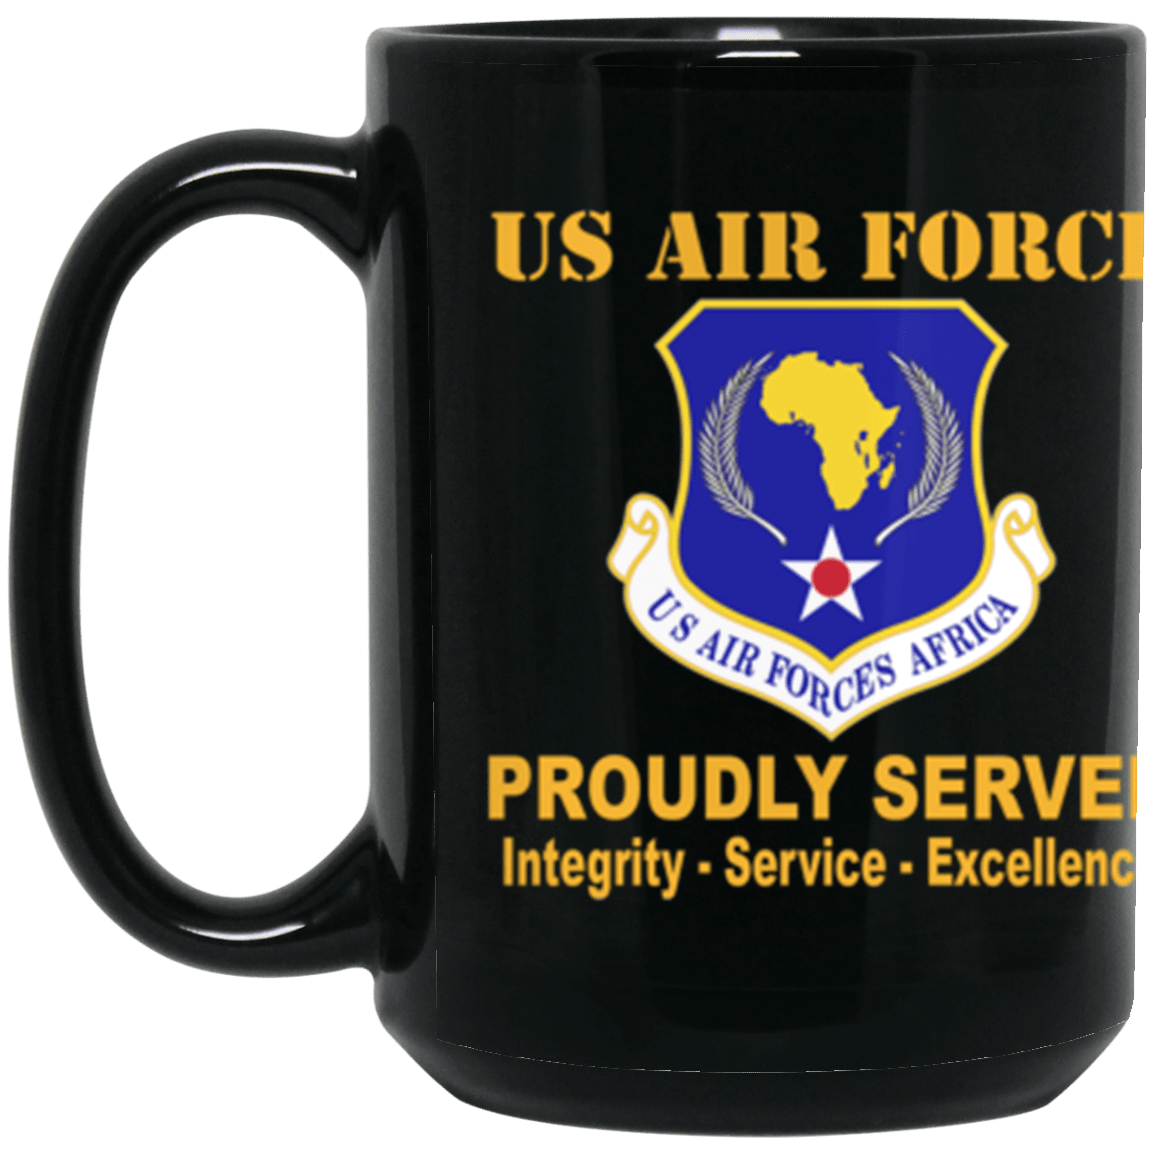 US Air Force Air Mobility Command Proudly Served Core Values 15 oz. Black Mug-Mug-USAF-Veterans Nation